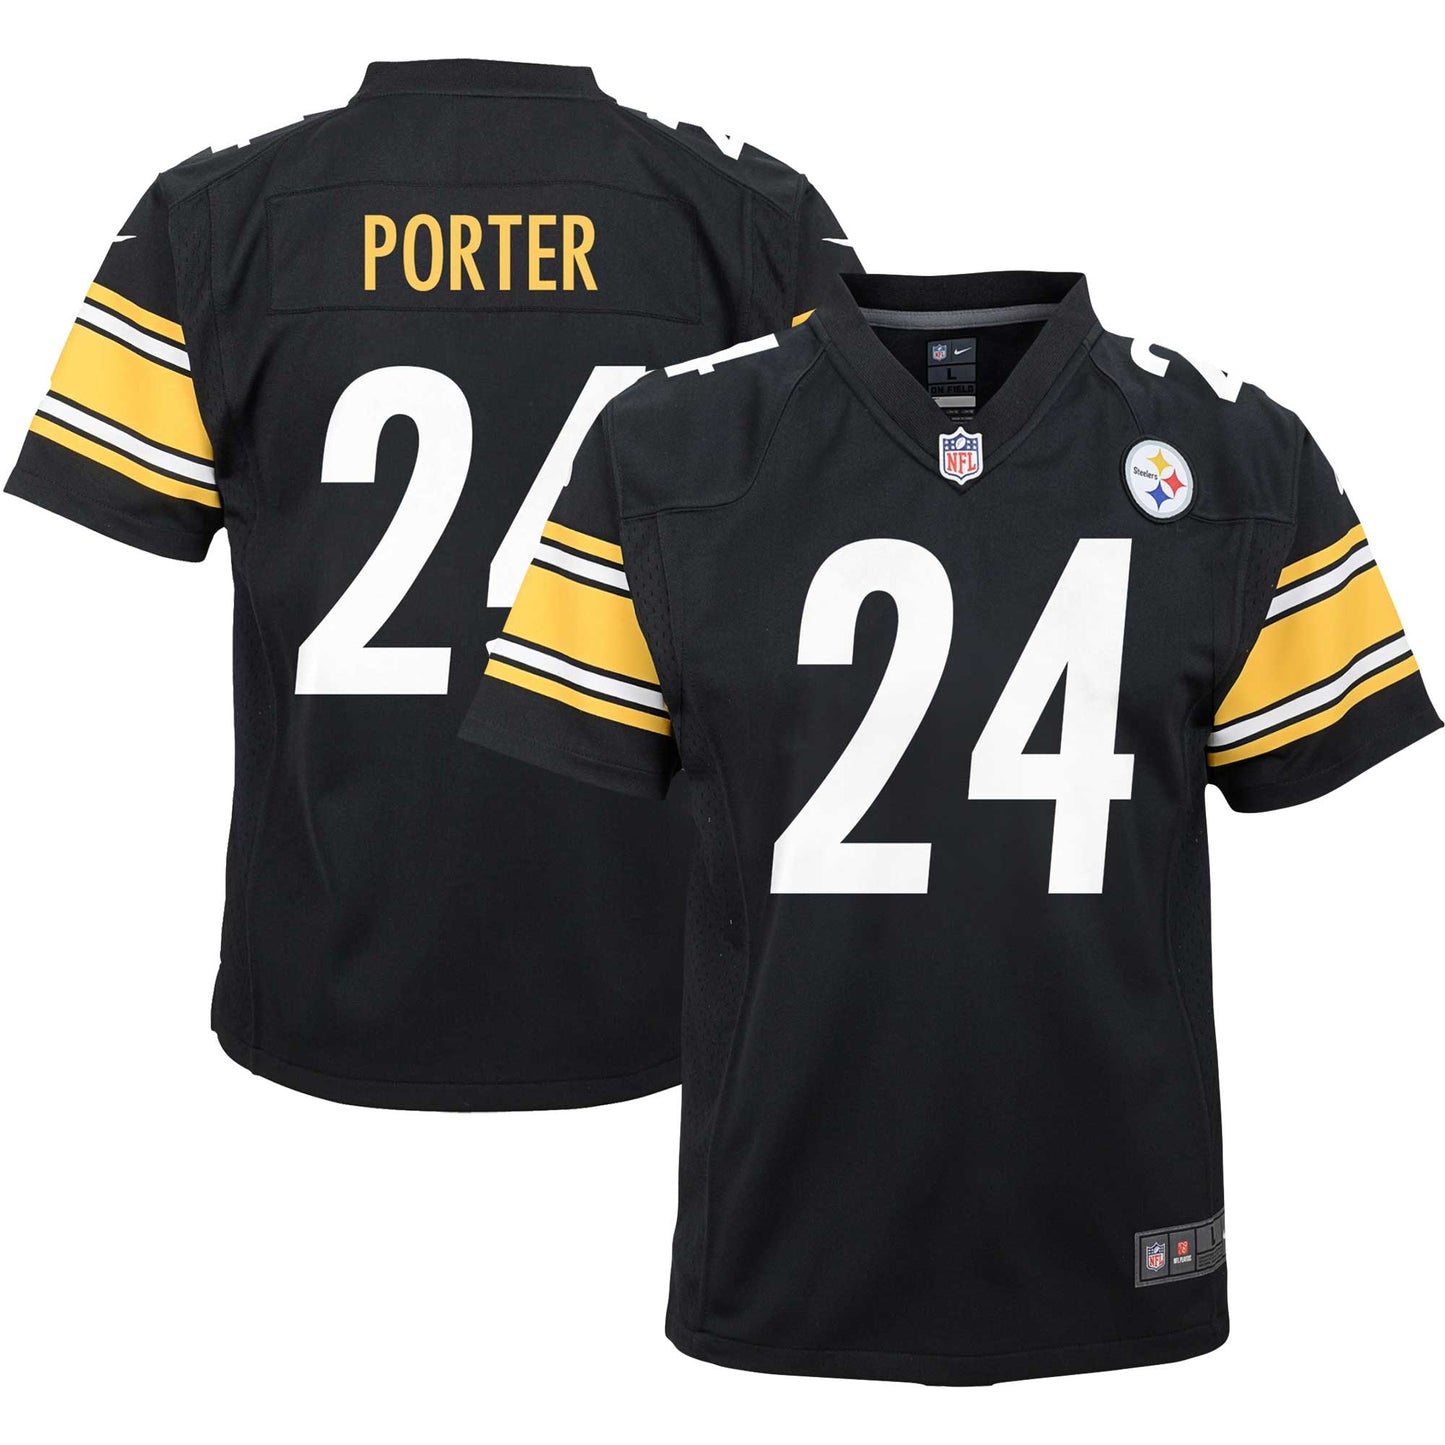 Joey Porter Jr. Pittsburgh Steelers Nike Youth Game Jersey - Black